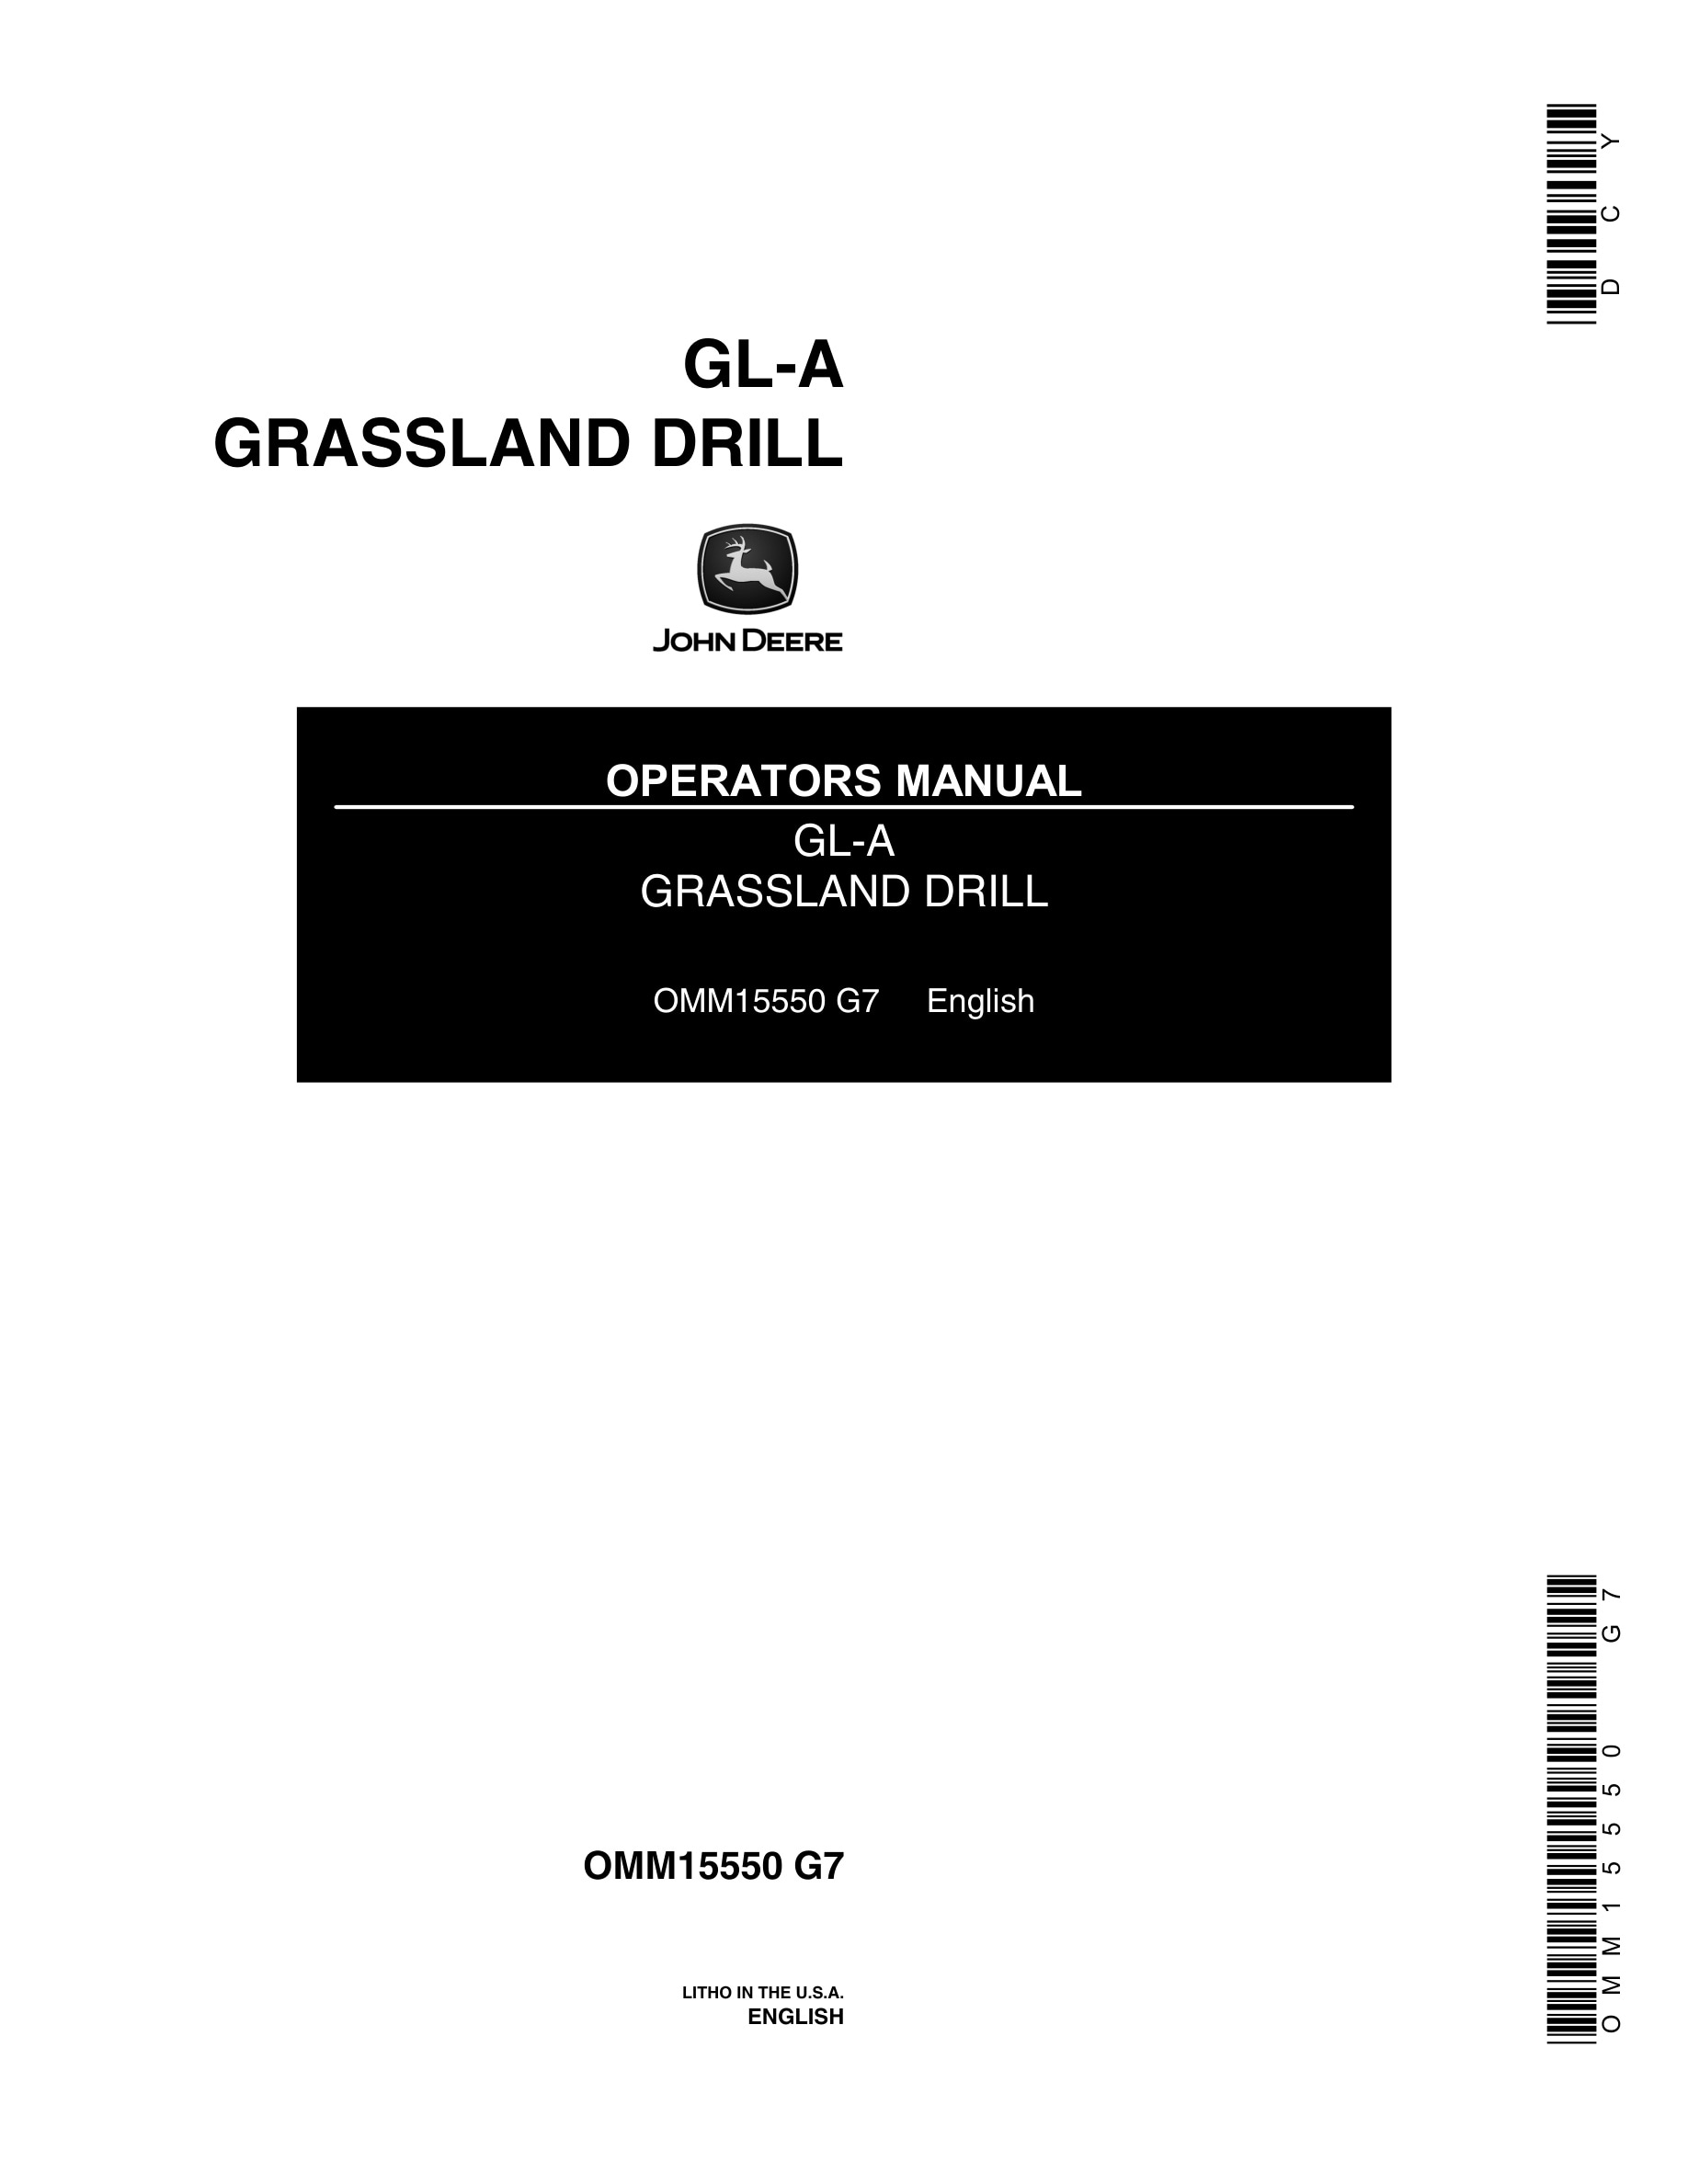 John Deere GL-A GRASSLAND DRILL Operator Manual OMM15550-1